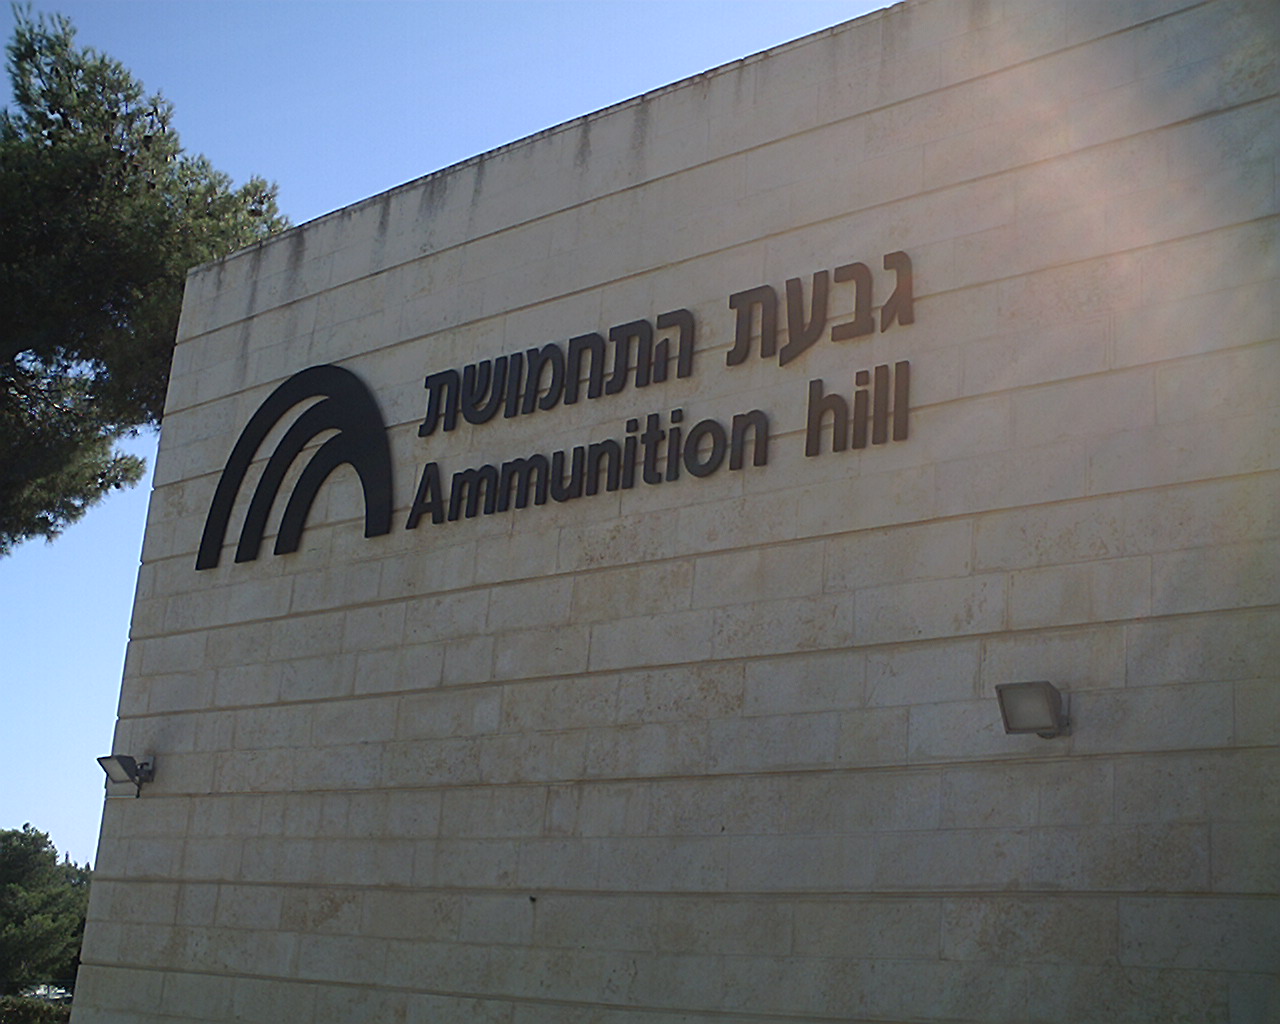 Ammunition Hill